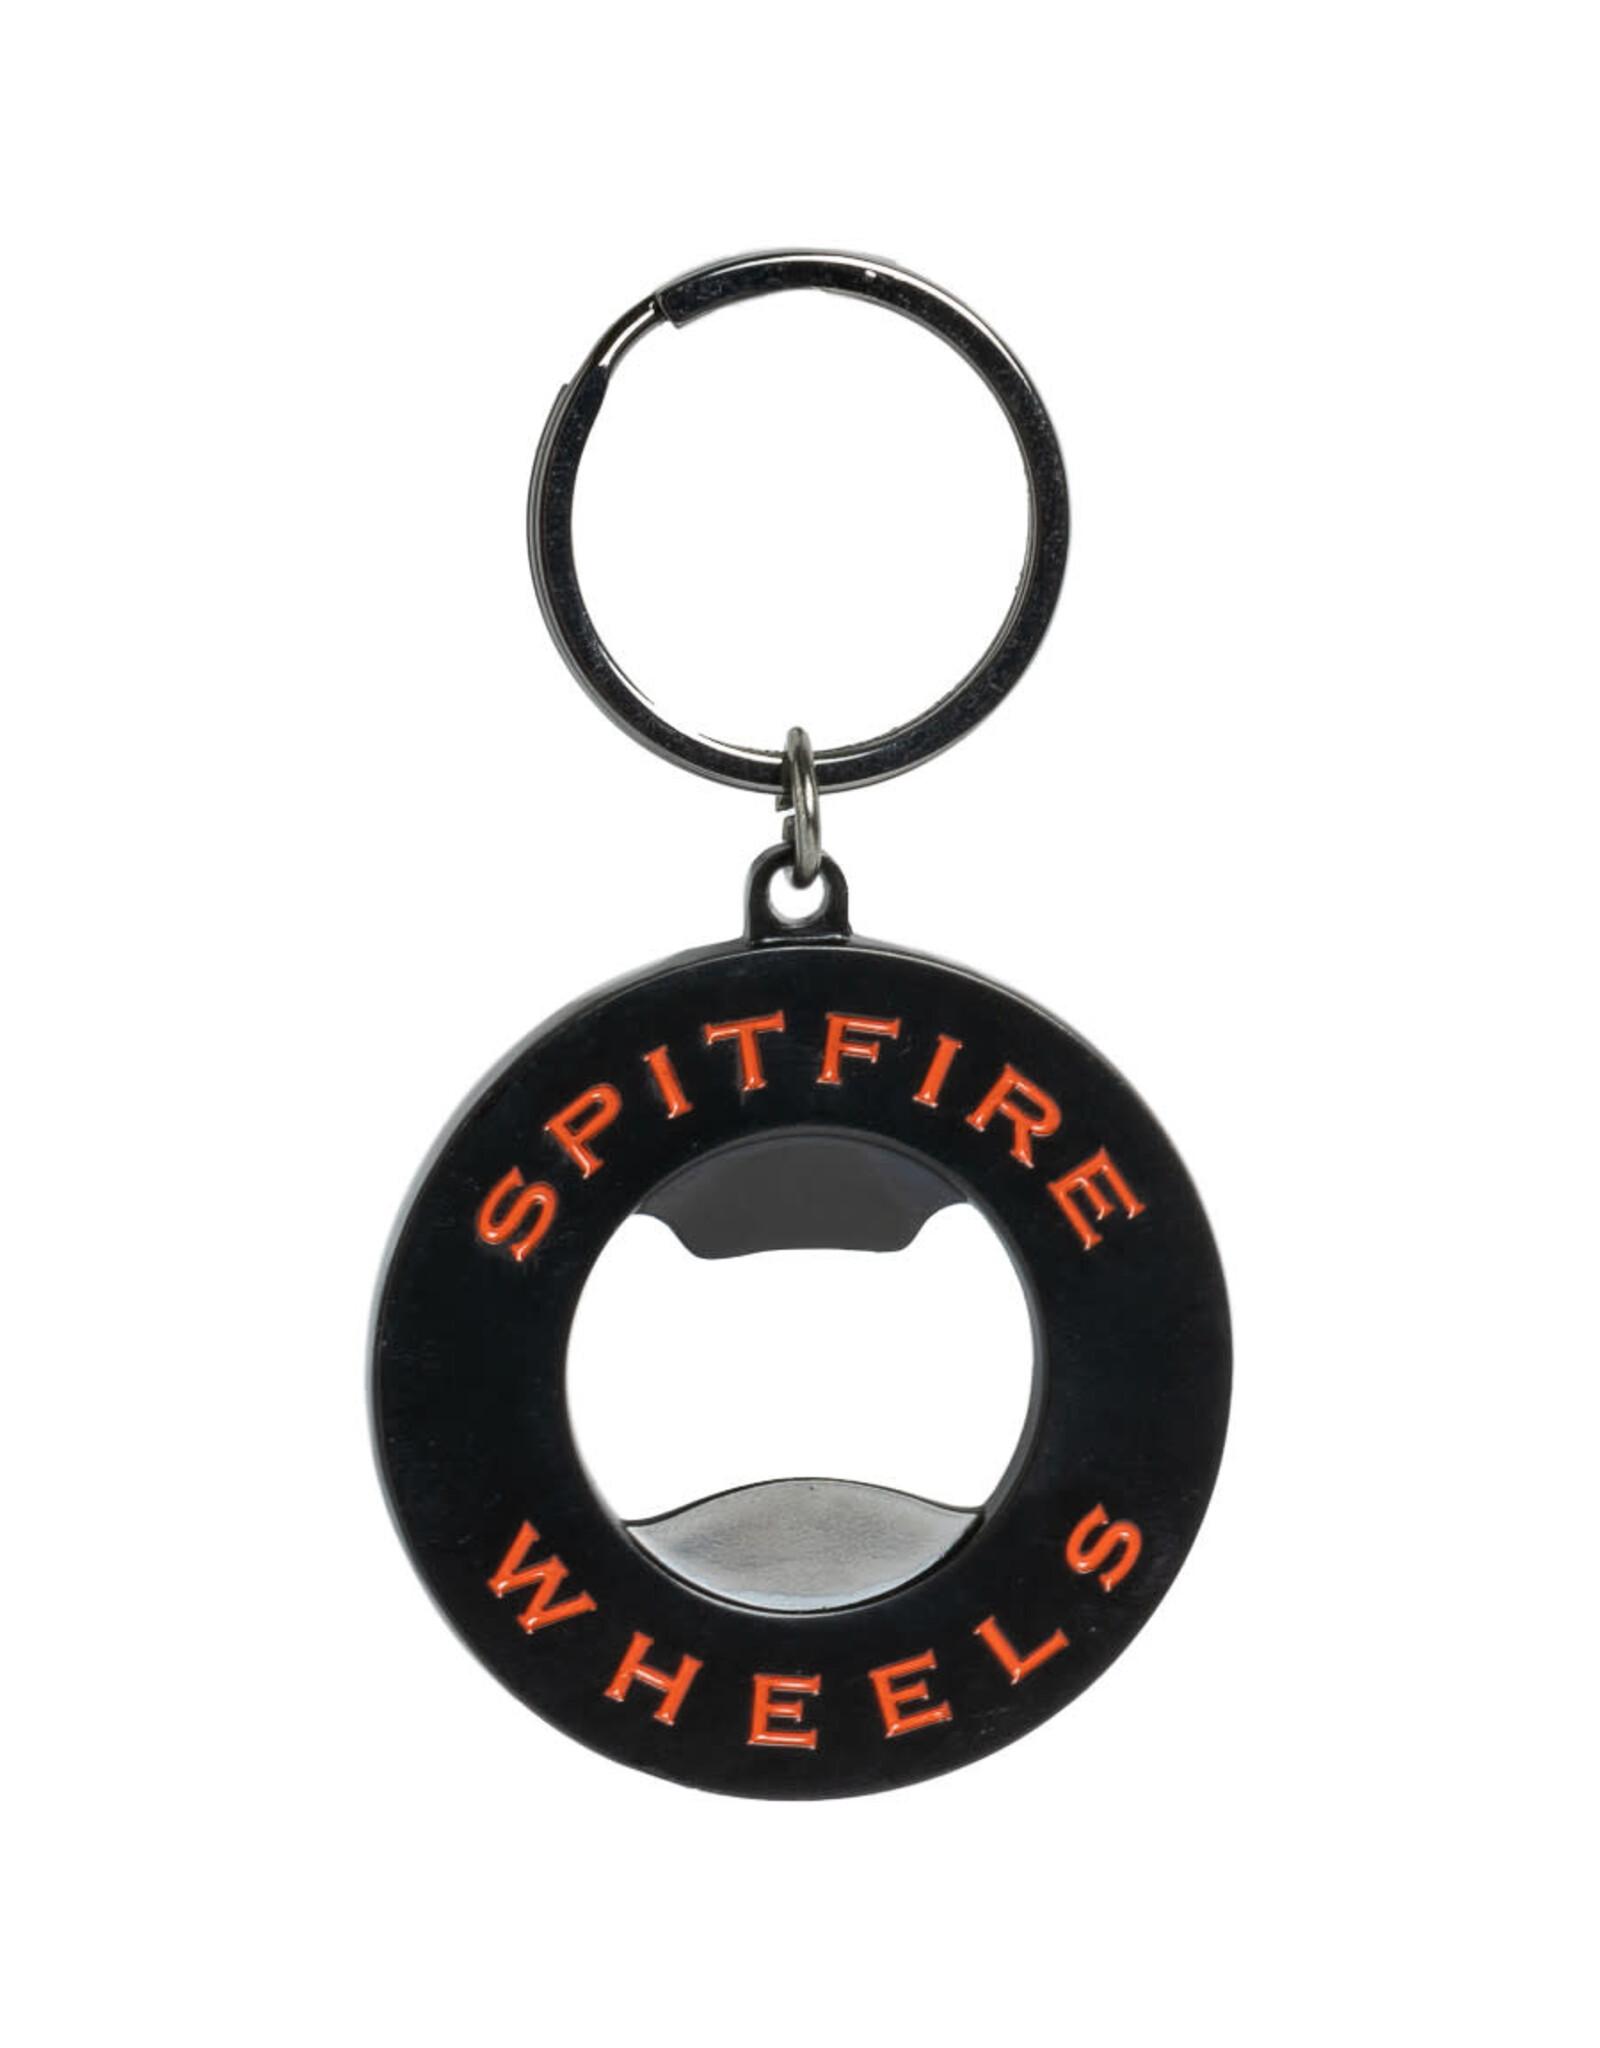 Spitfire Spitfire Bottle Opener Classic Swirl Key Chain (Black/Red)